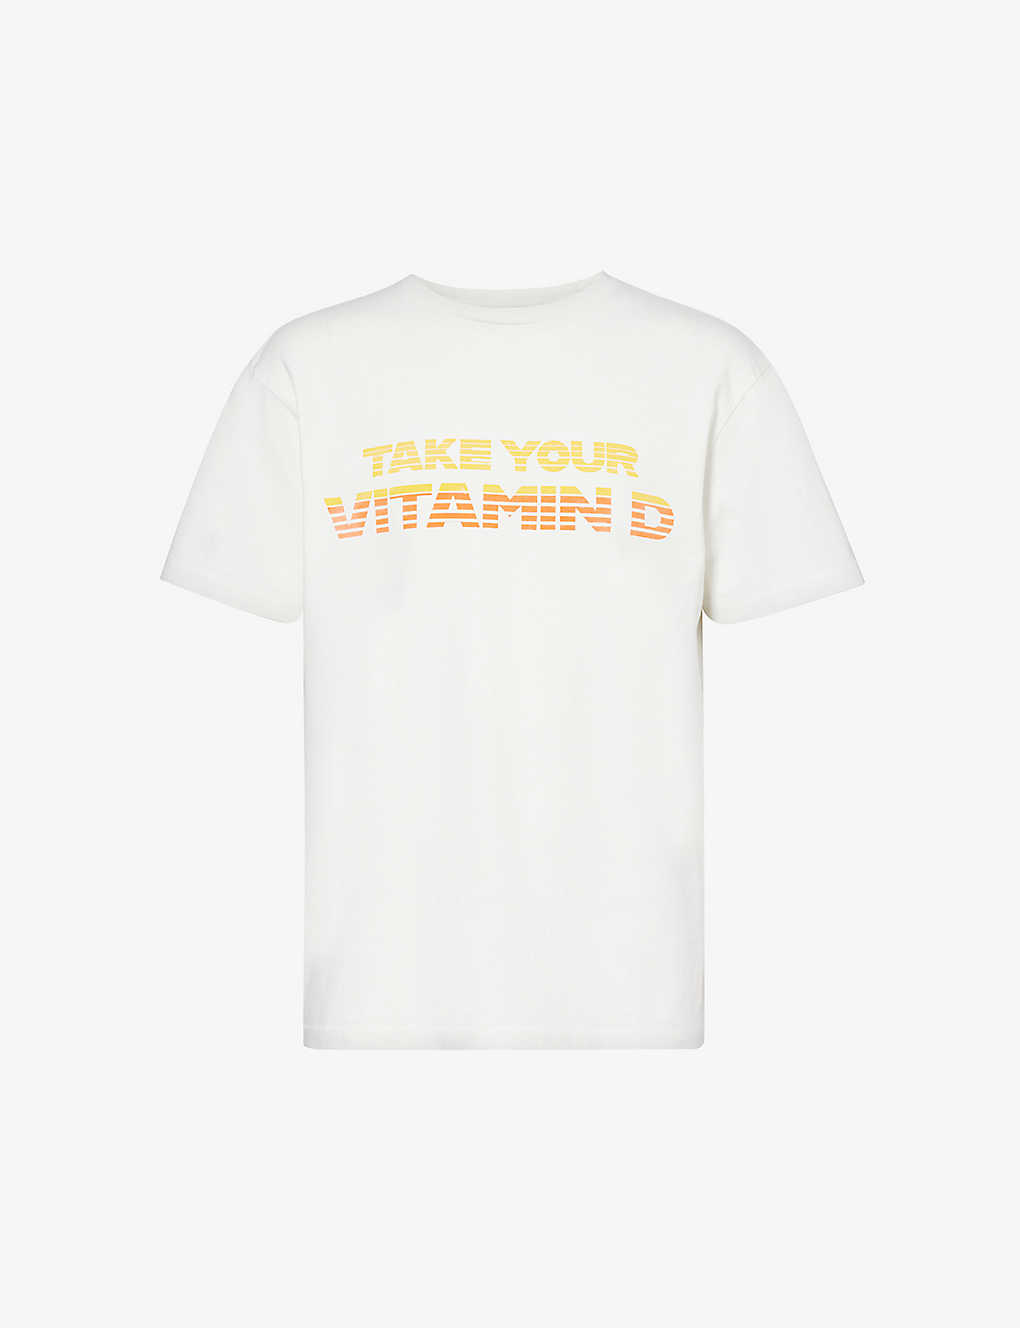 Shop Gallery Dept. Gallery Dept Men's White Vitamin D Graphic-print Cotton-jersey T-shirt